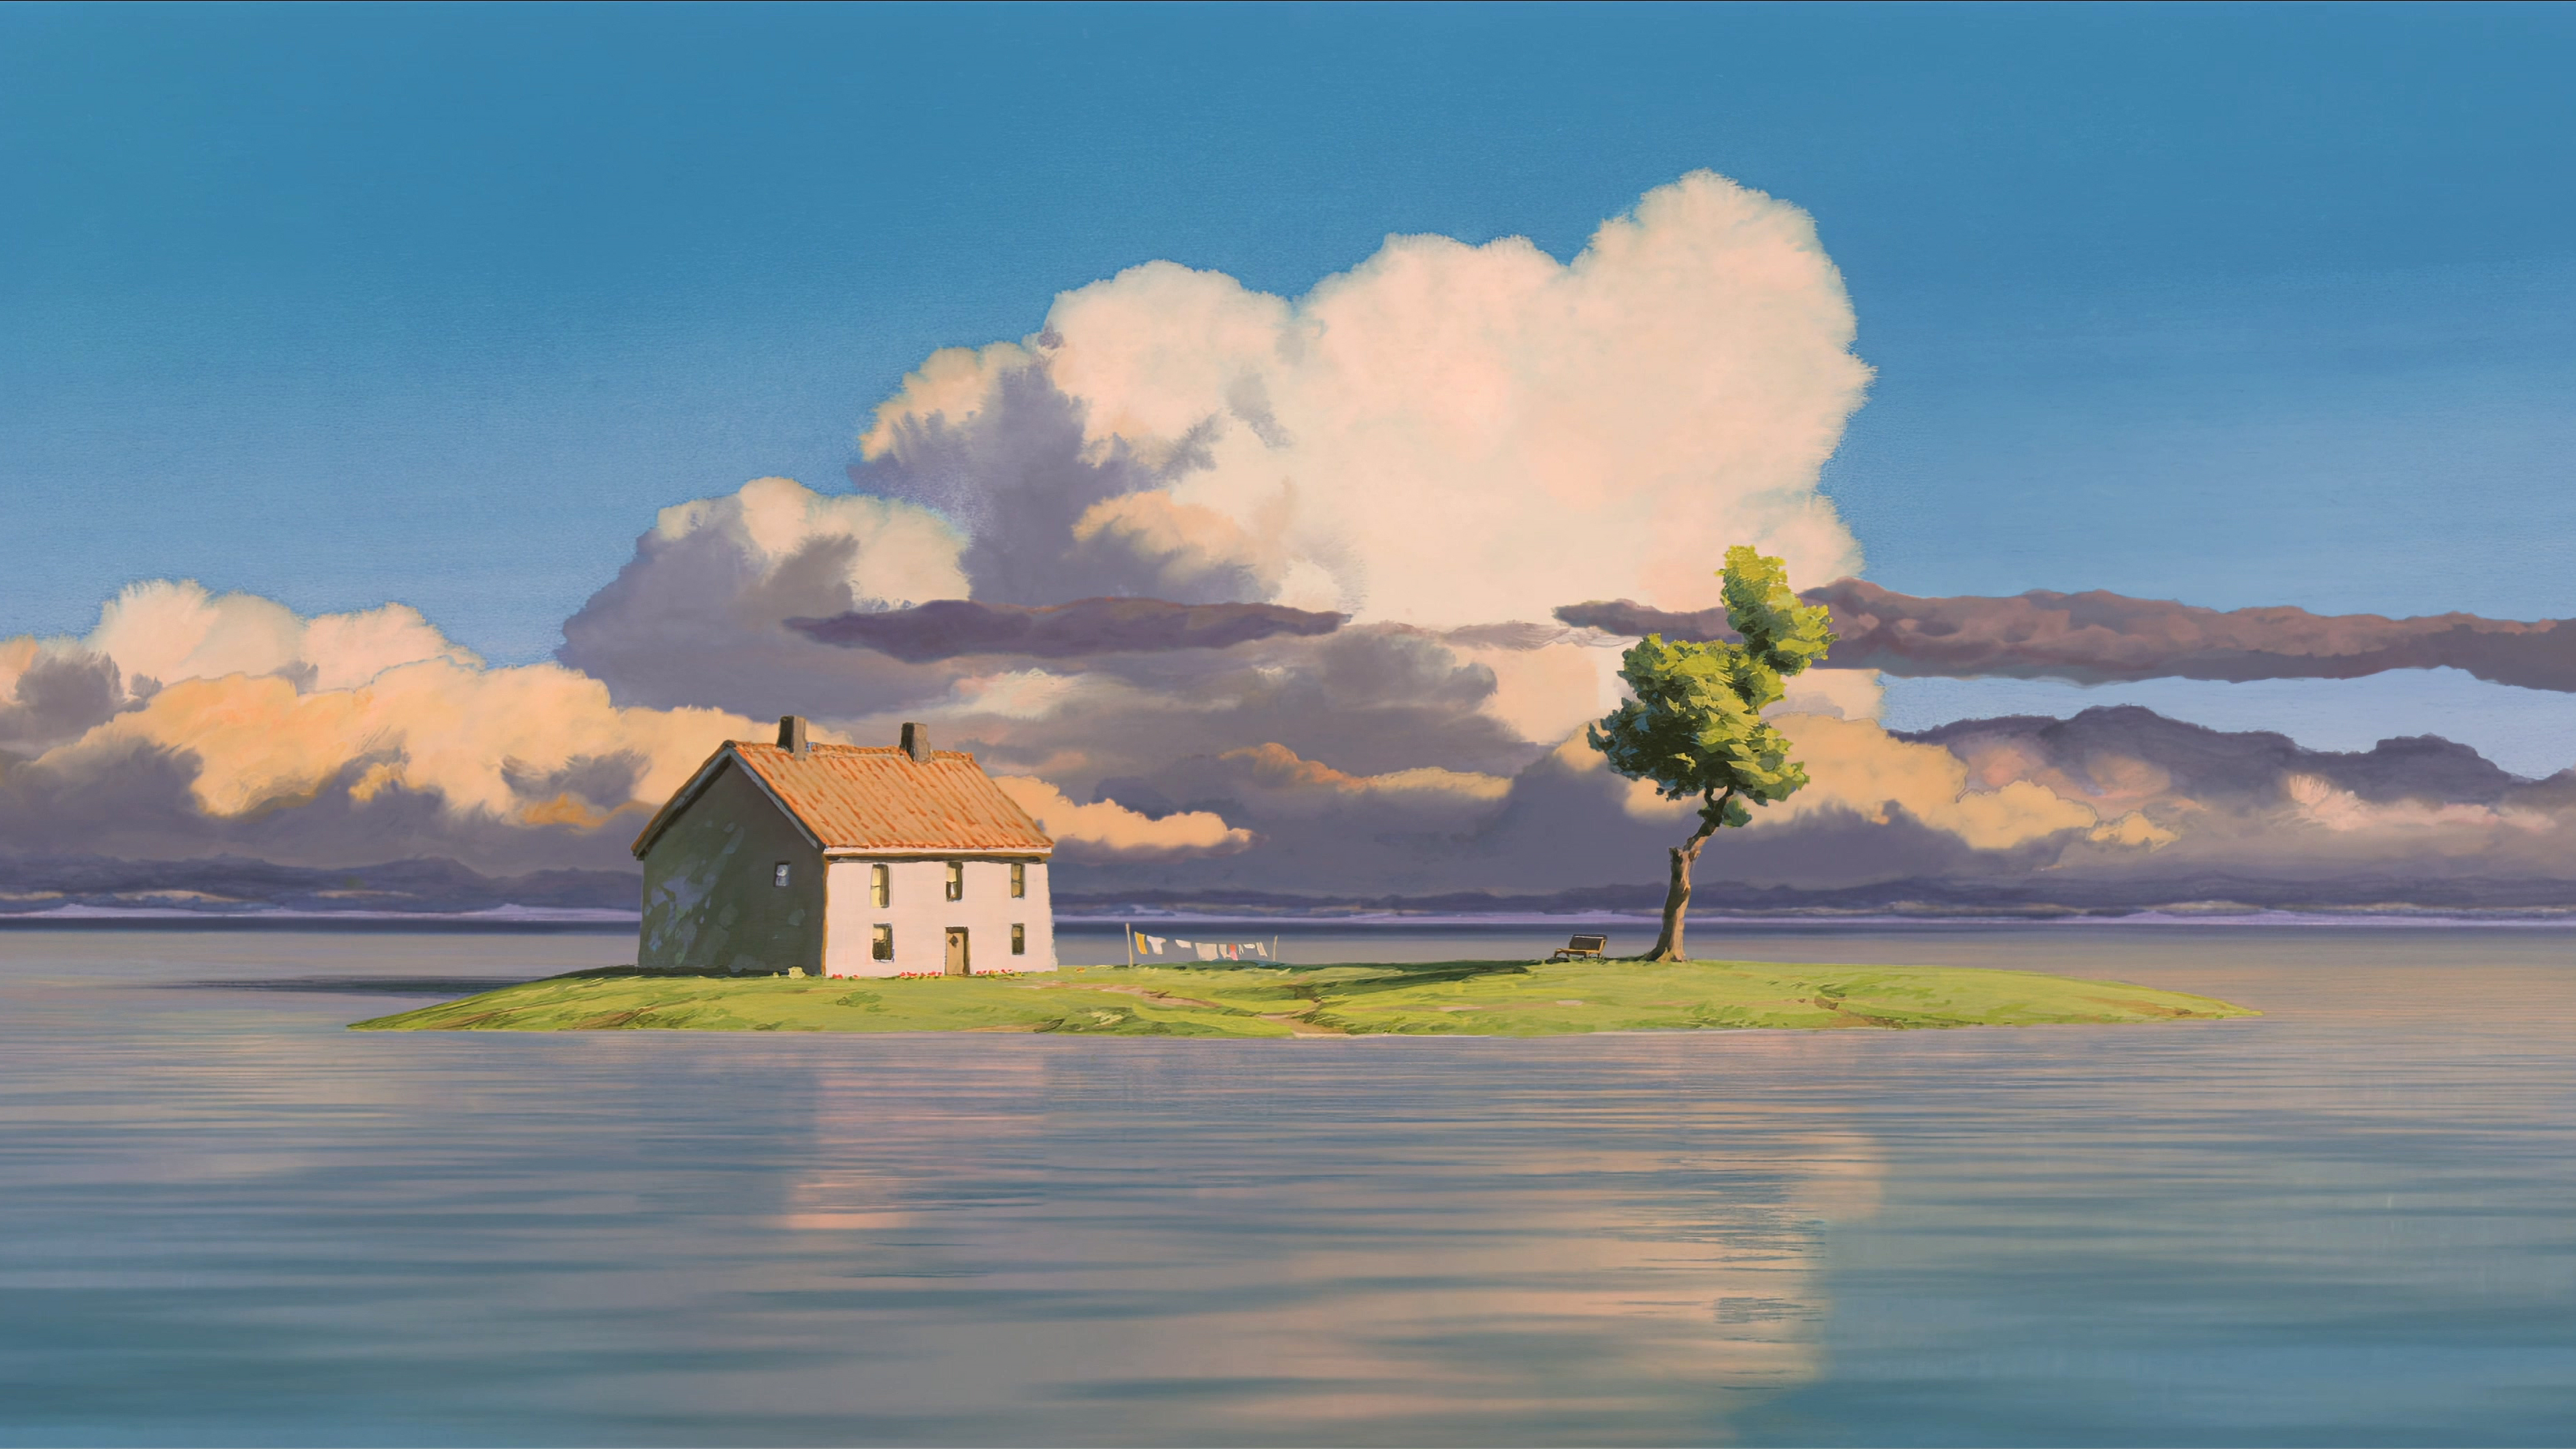 Spirited Away Landscape Studio Ghibli Anime Clouds Water House Island Reflection 4K Trees 3840x2160